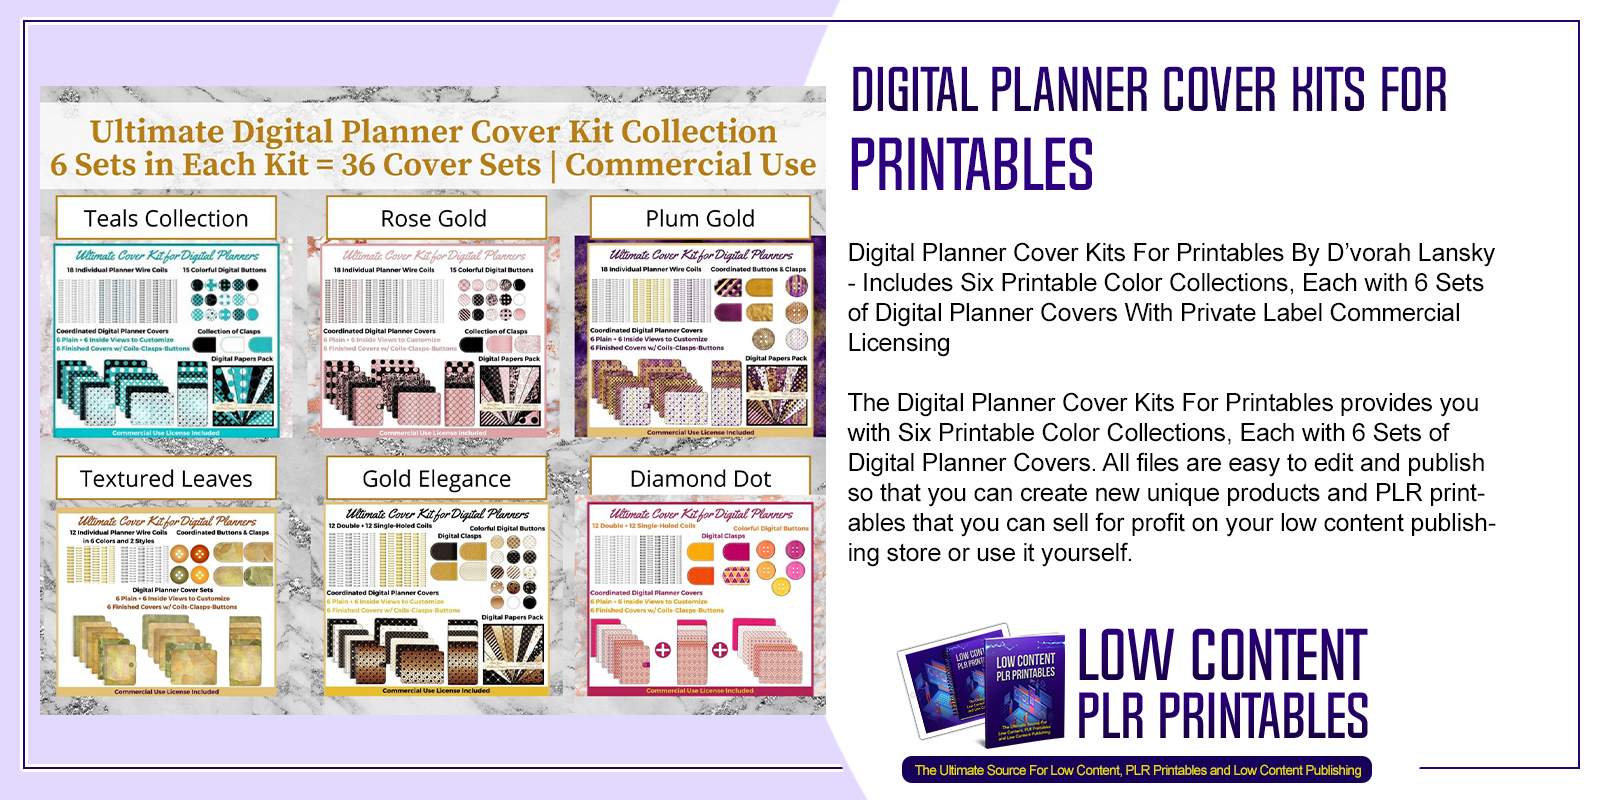 Digital Planner Cover Kits For Printables